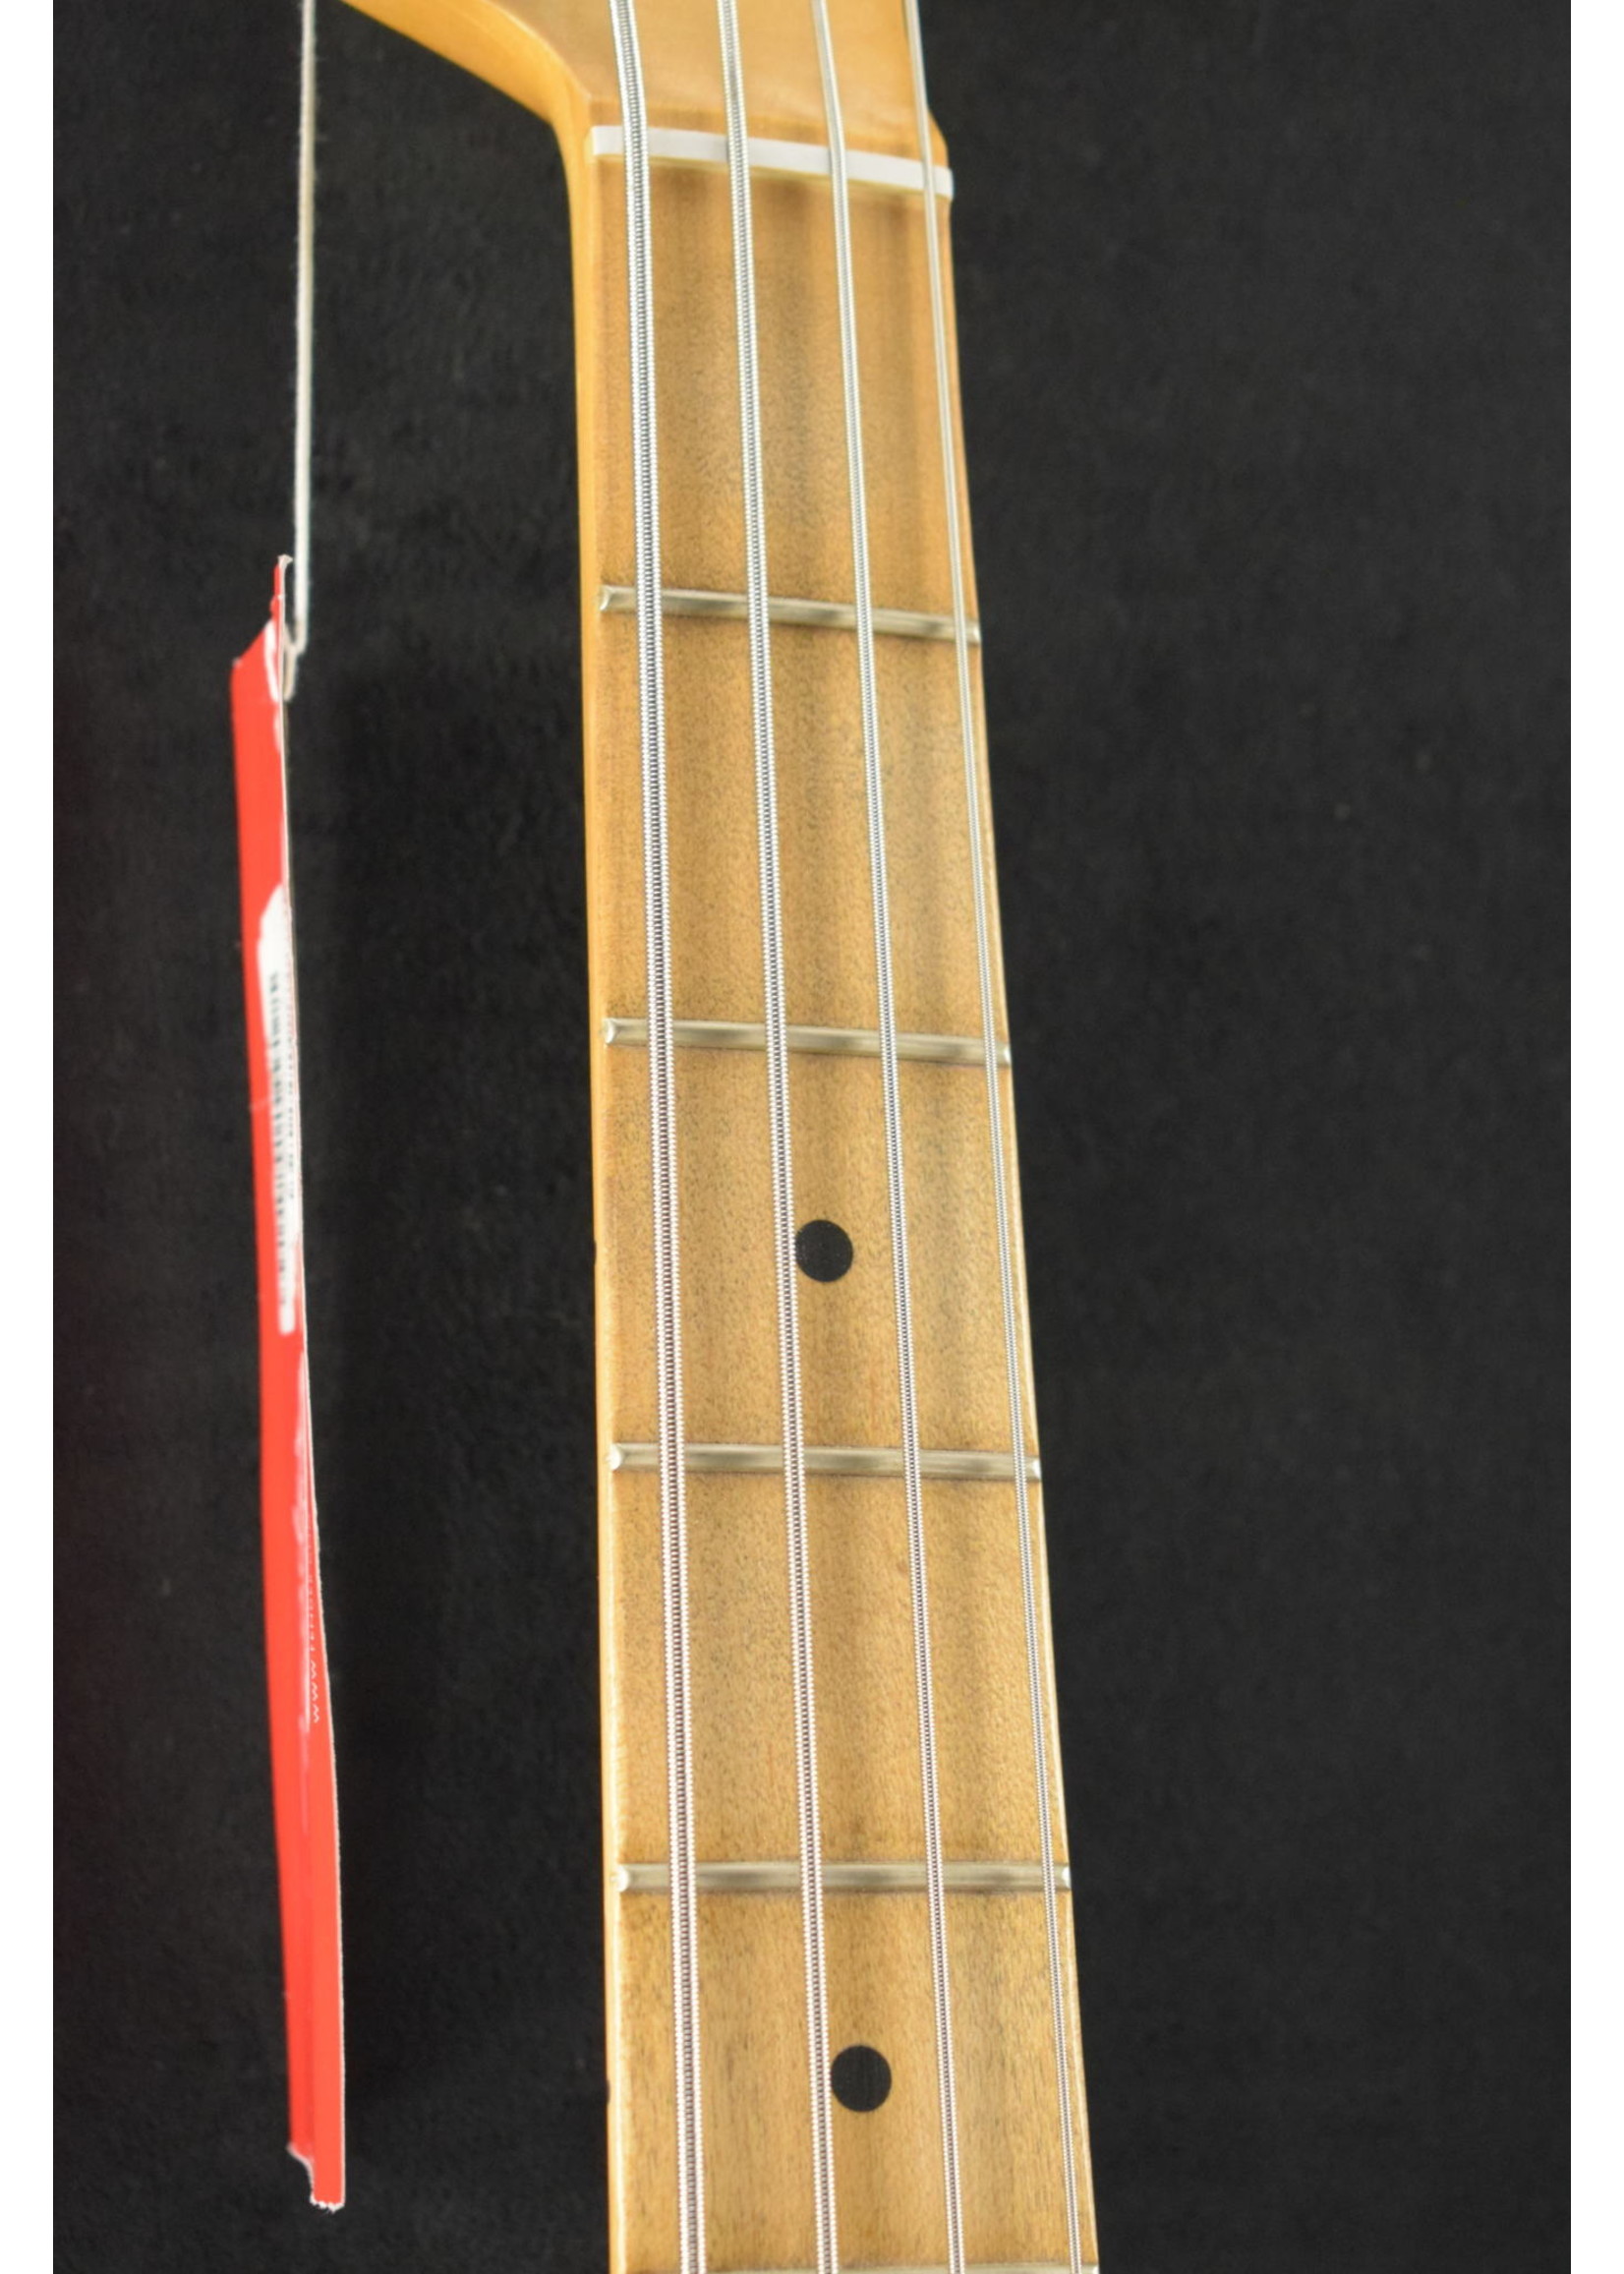 Fender Fender Mike Dirnt Road Worn Precision Bass White Blonde Maple Fingerboard